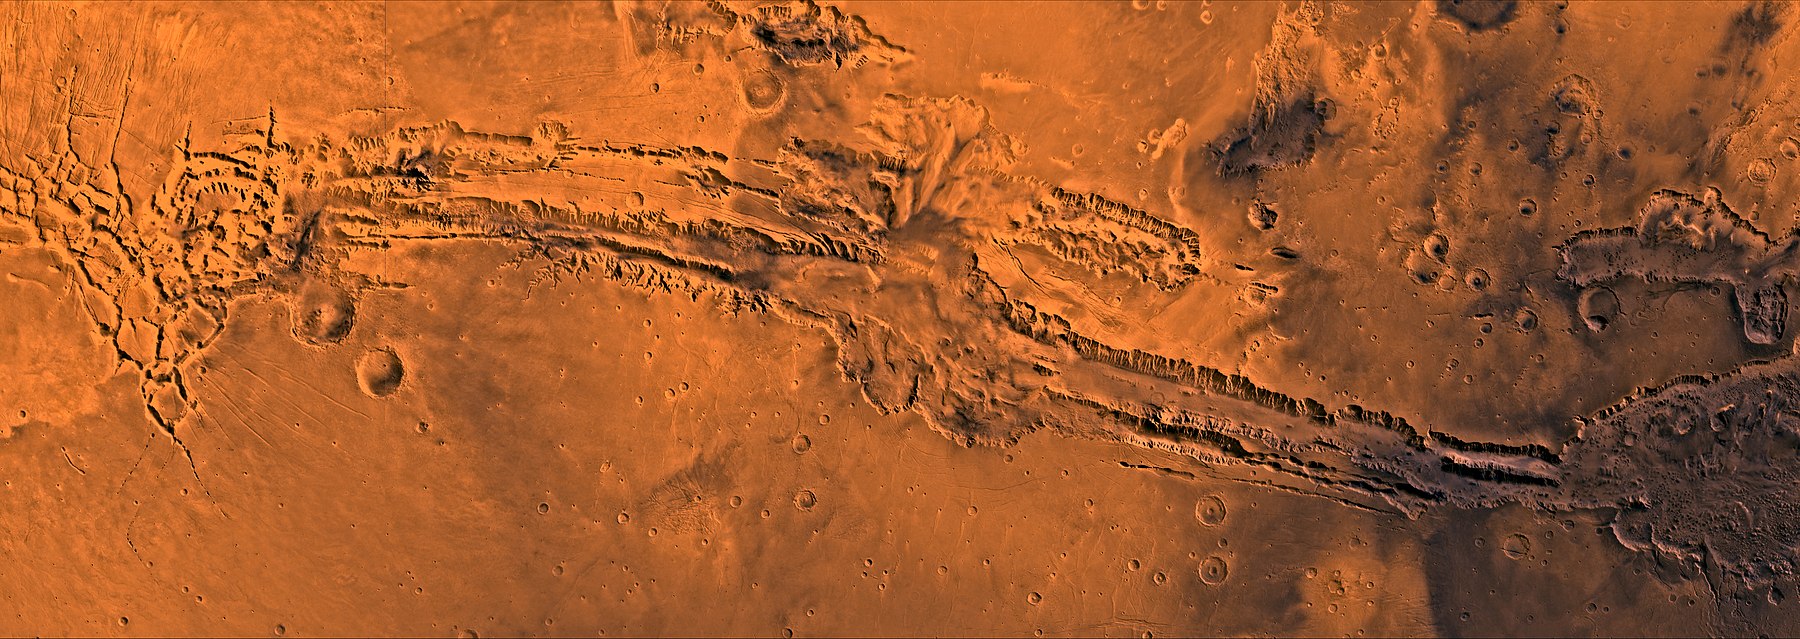 Марс Планета Долина Маринера